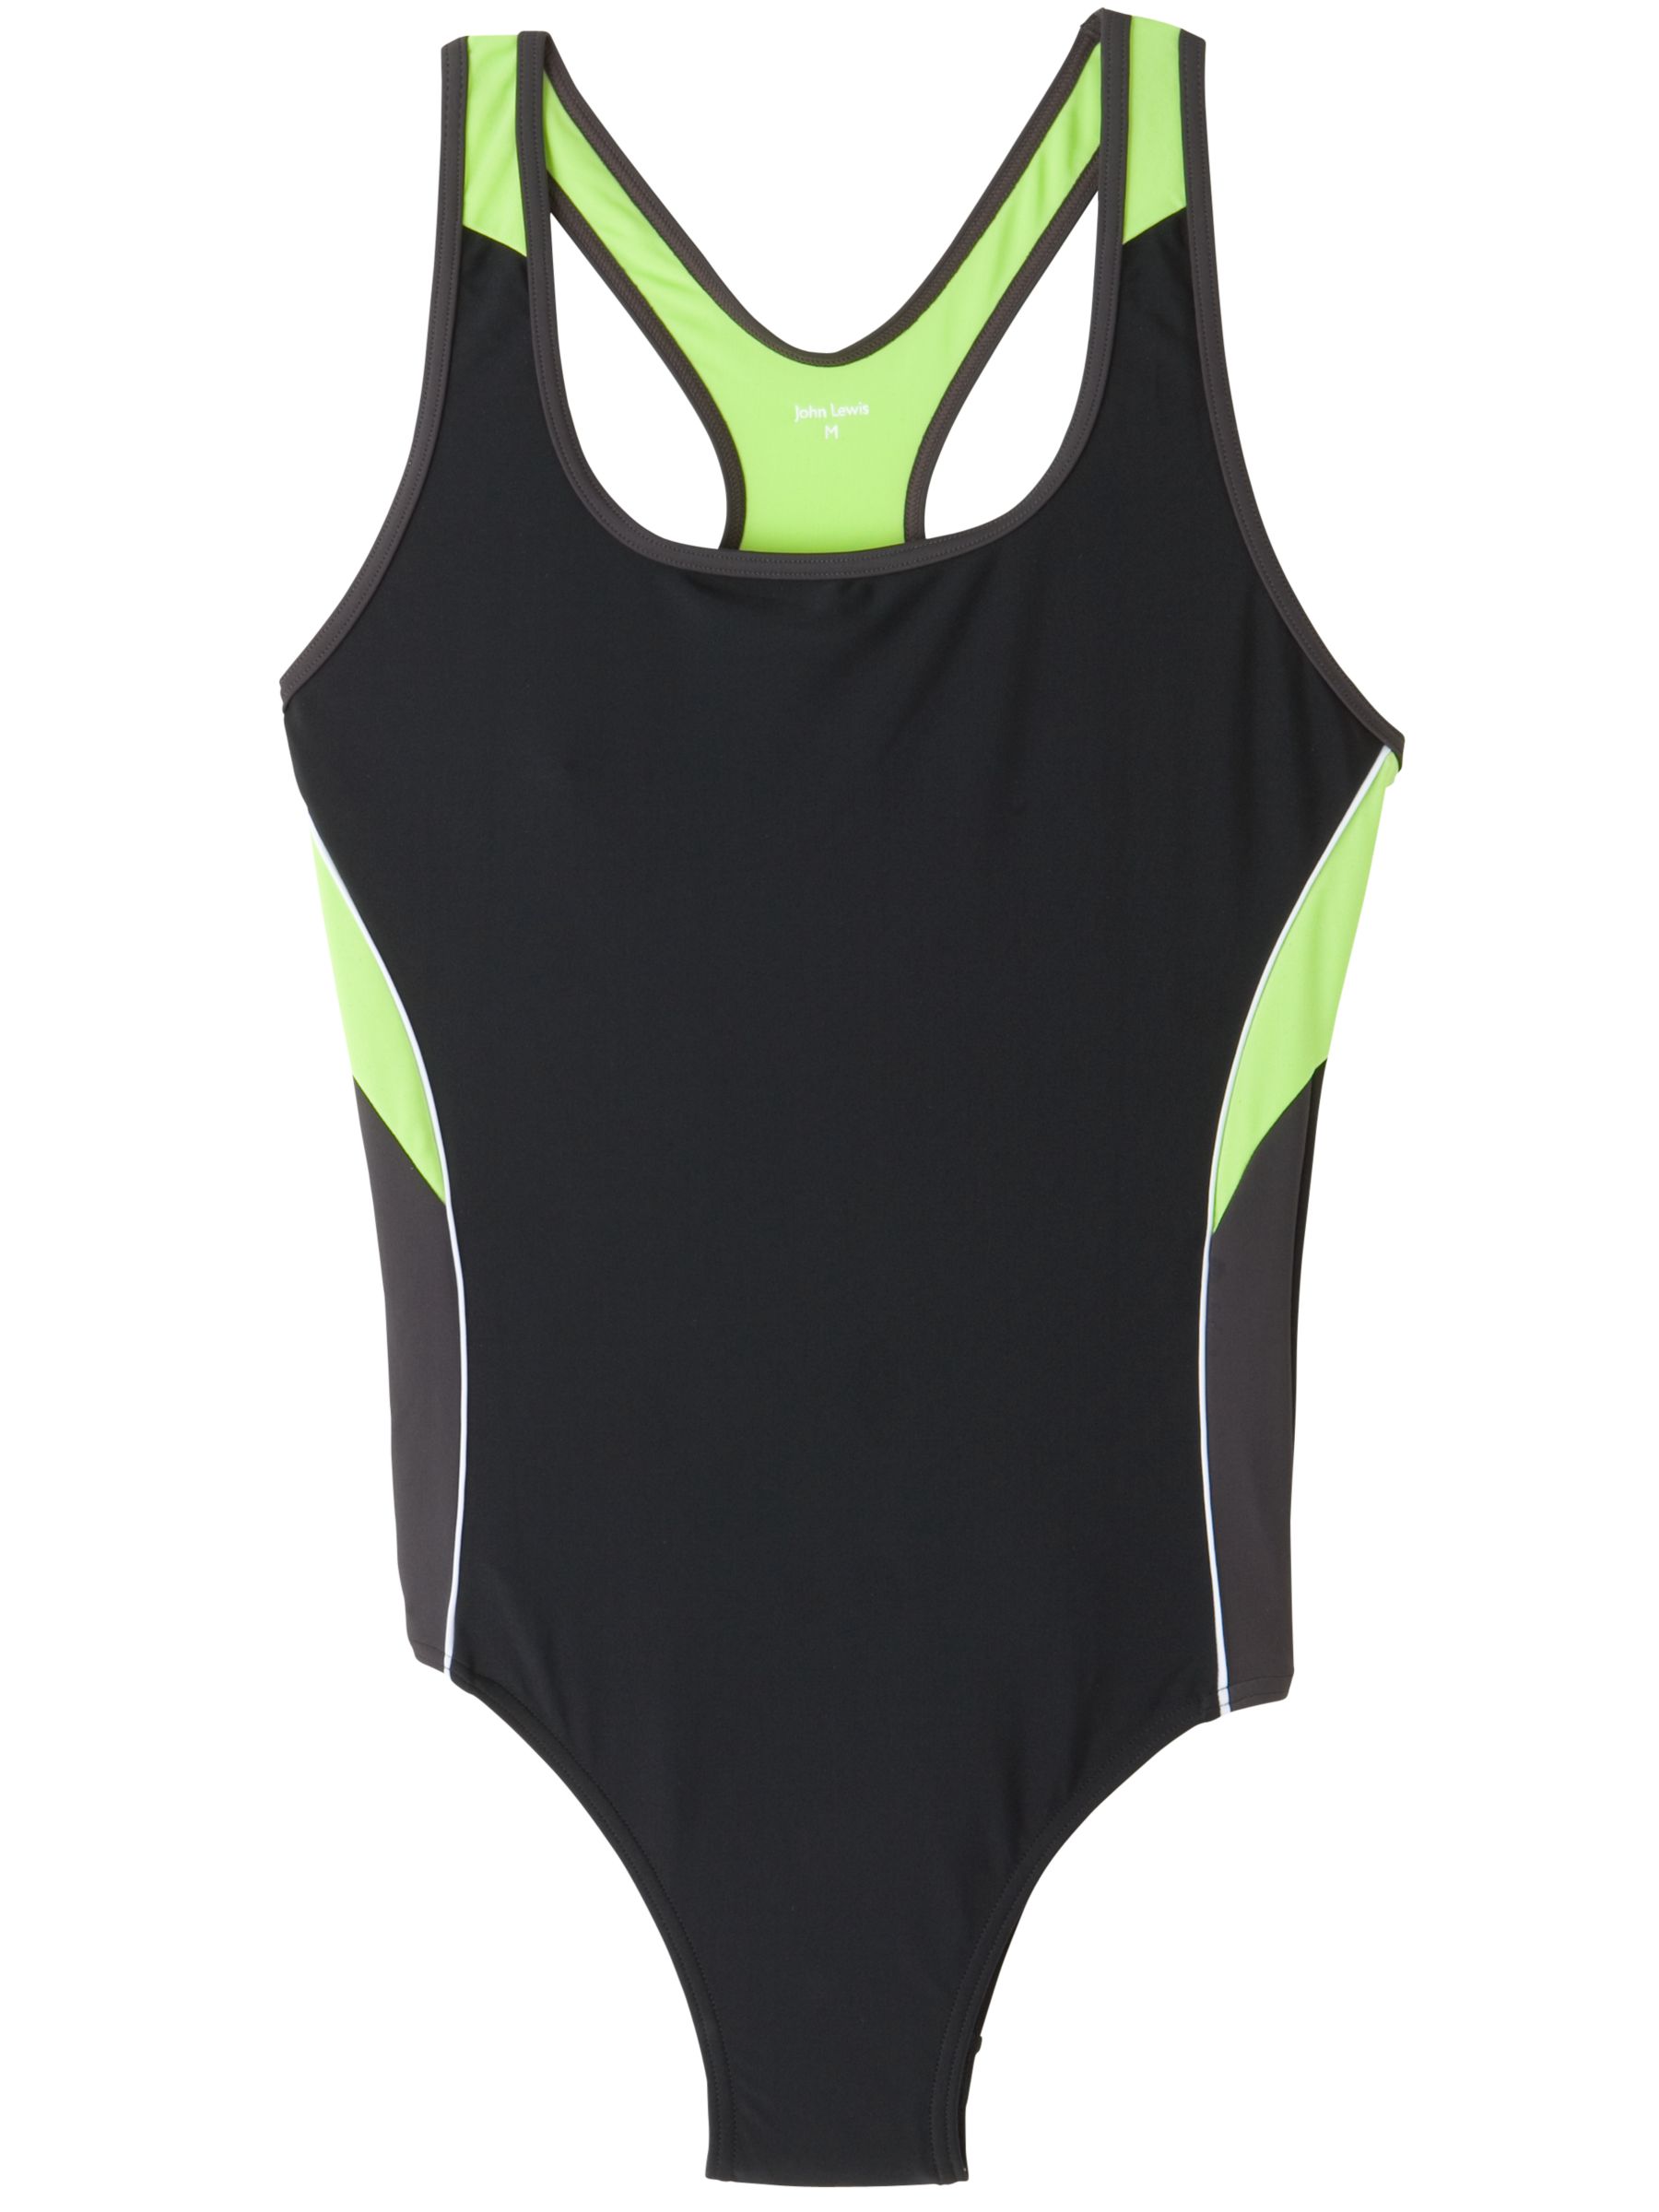 John Lewis Swimsuit, Black/Green